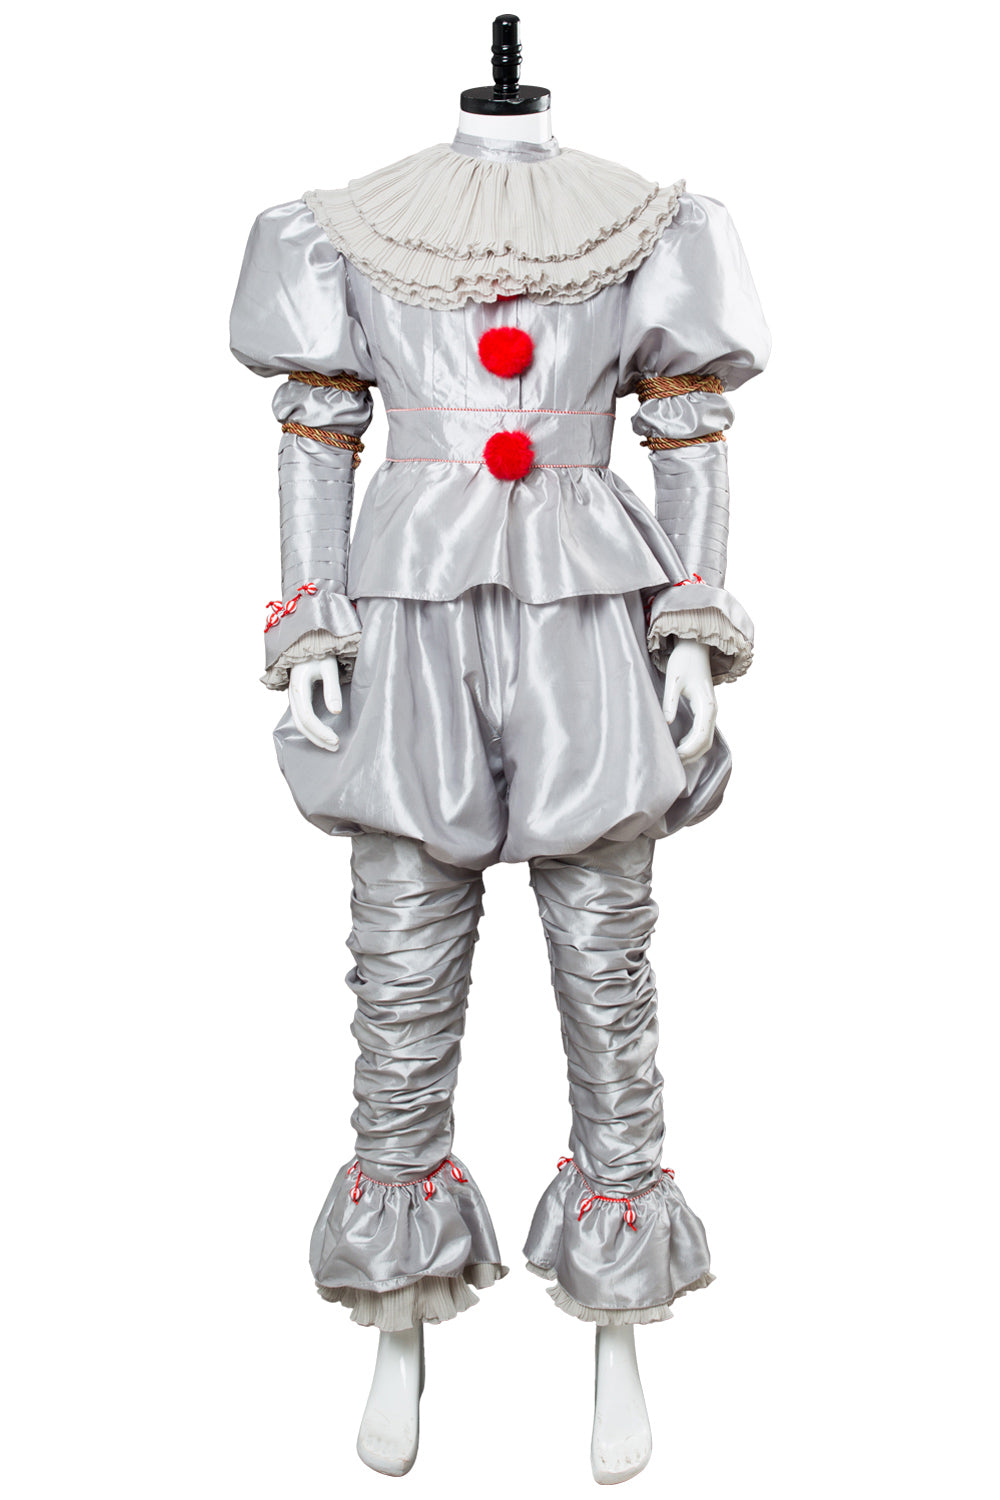 Film 2019 Es: Kapitel 2 Horrorclown Pennywise The Clown Outfit Cosplay Kostüm NEU